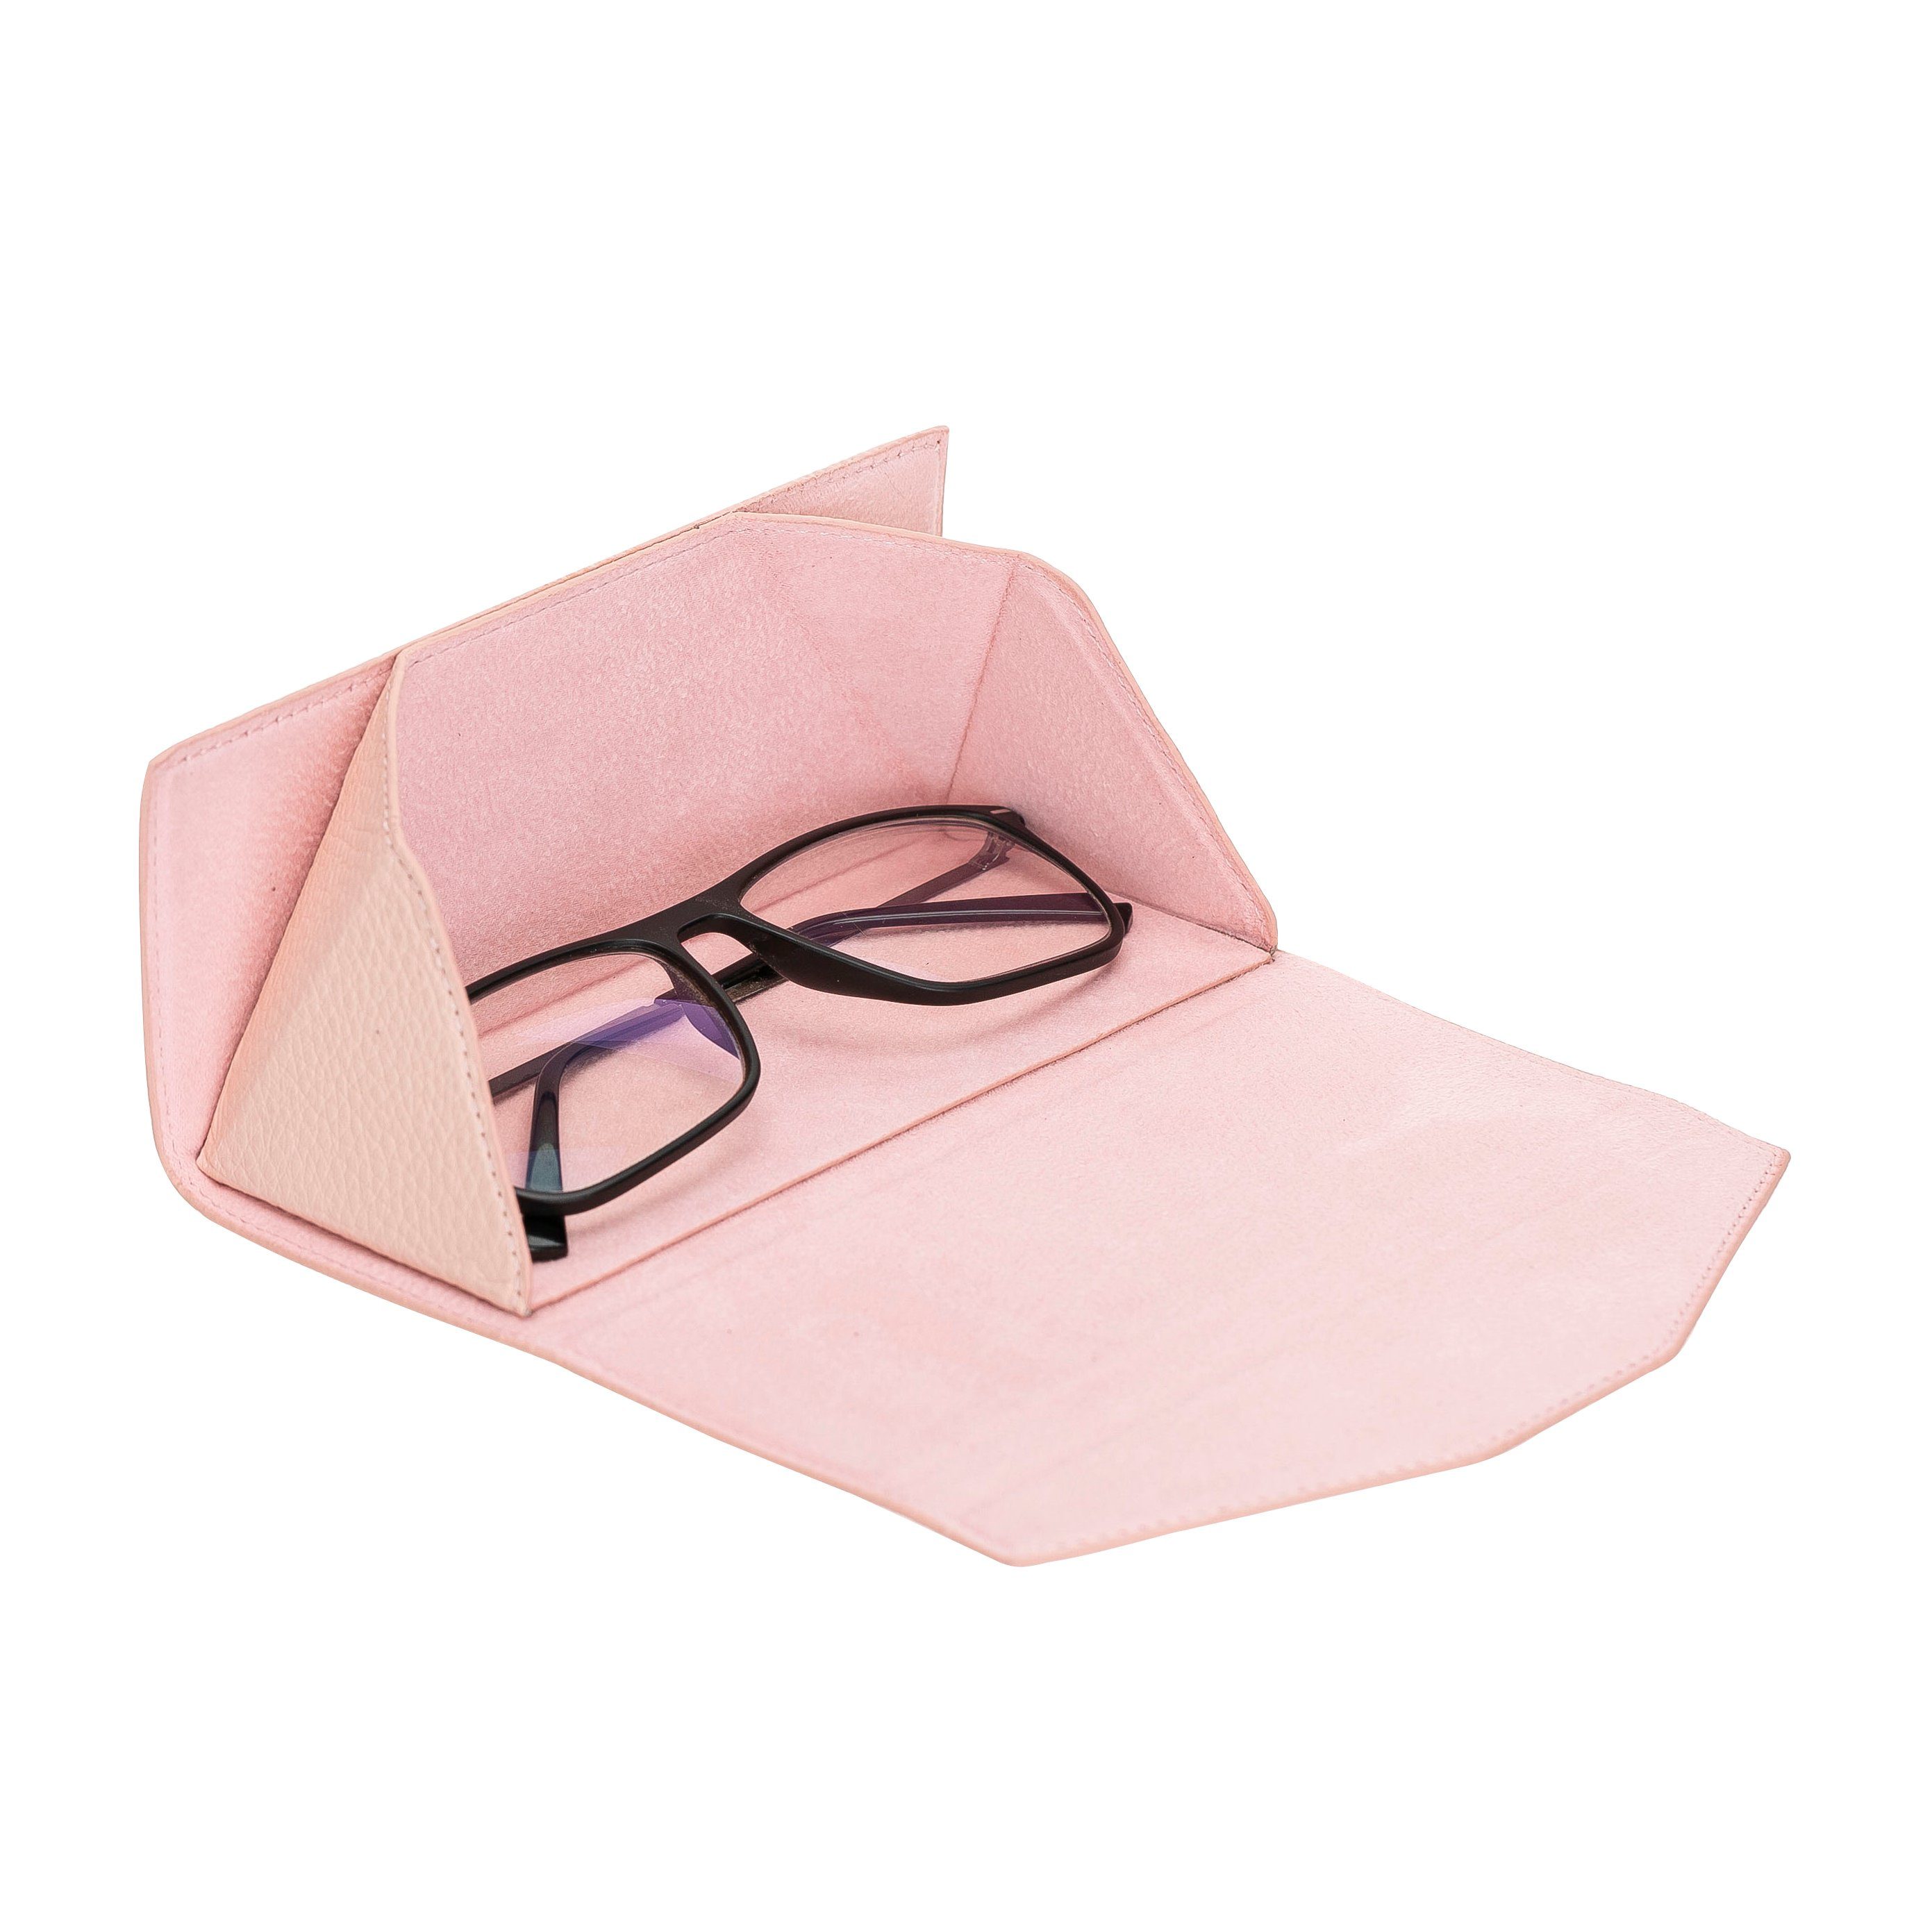 Solo Pelle Brillenetui Faltbares Brillenetui aus echtem Leder, tragbare Brillenbox zum falten